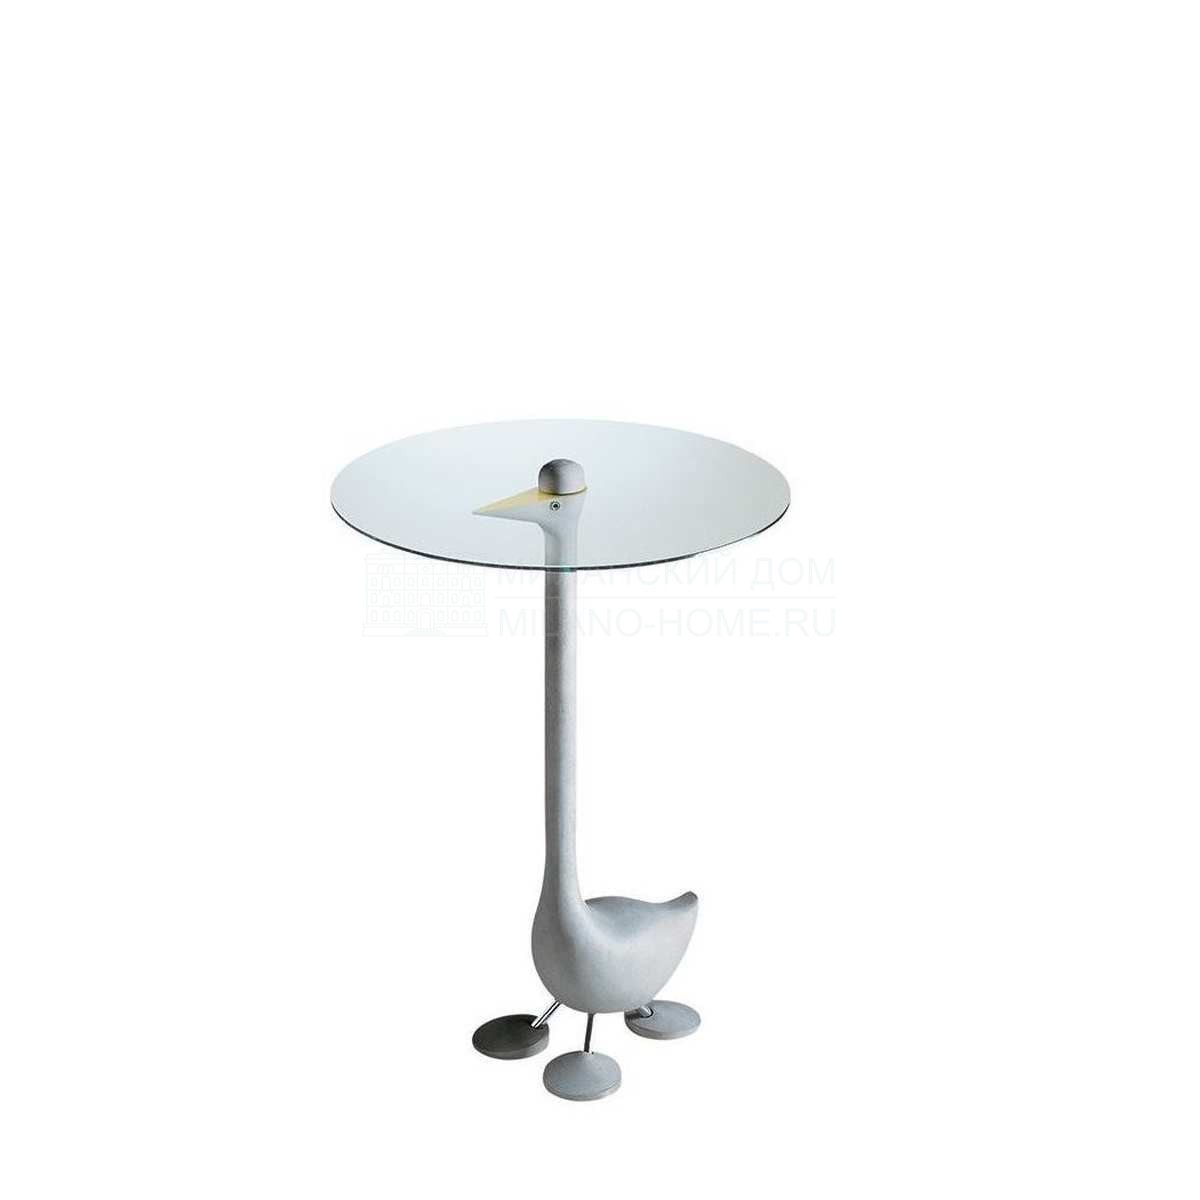 Стеклянный стол Sirfo table из Италии фабрики ZANOTTA